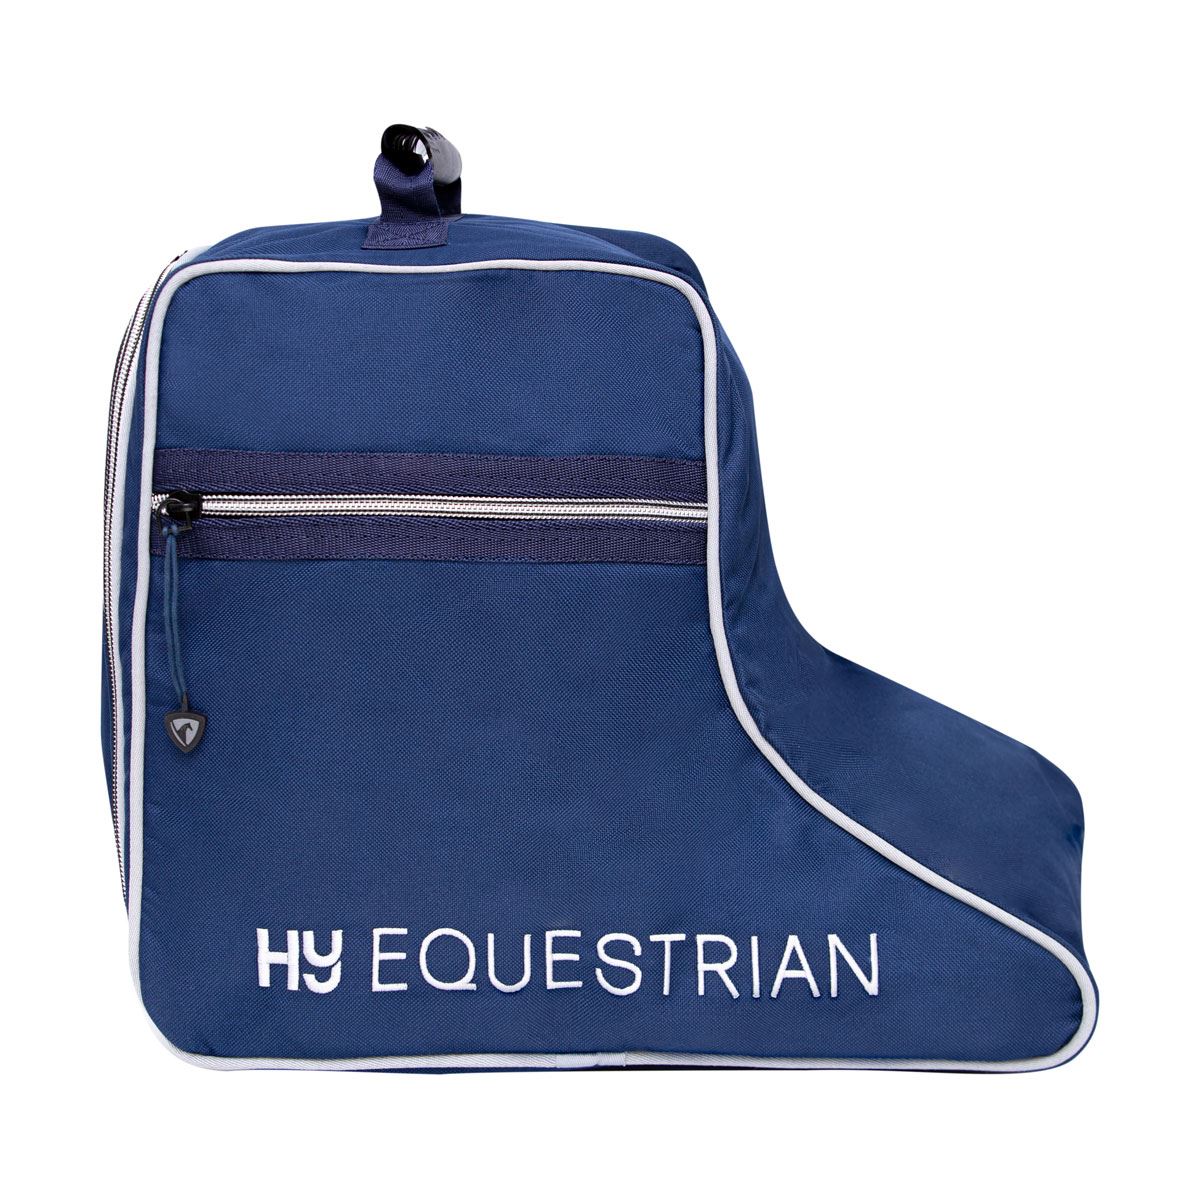 Hy Equestrian Jodhpur Boot Bag - Just Horse Riders